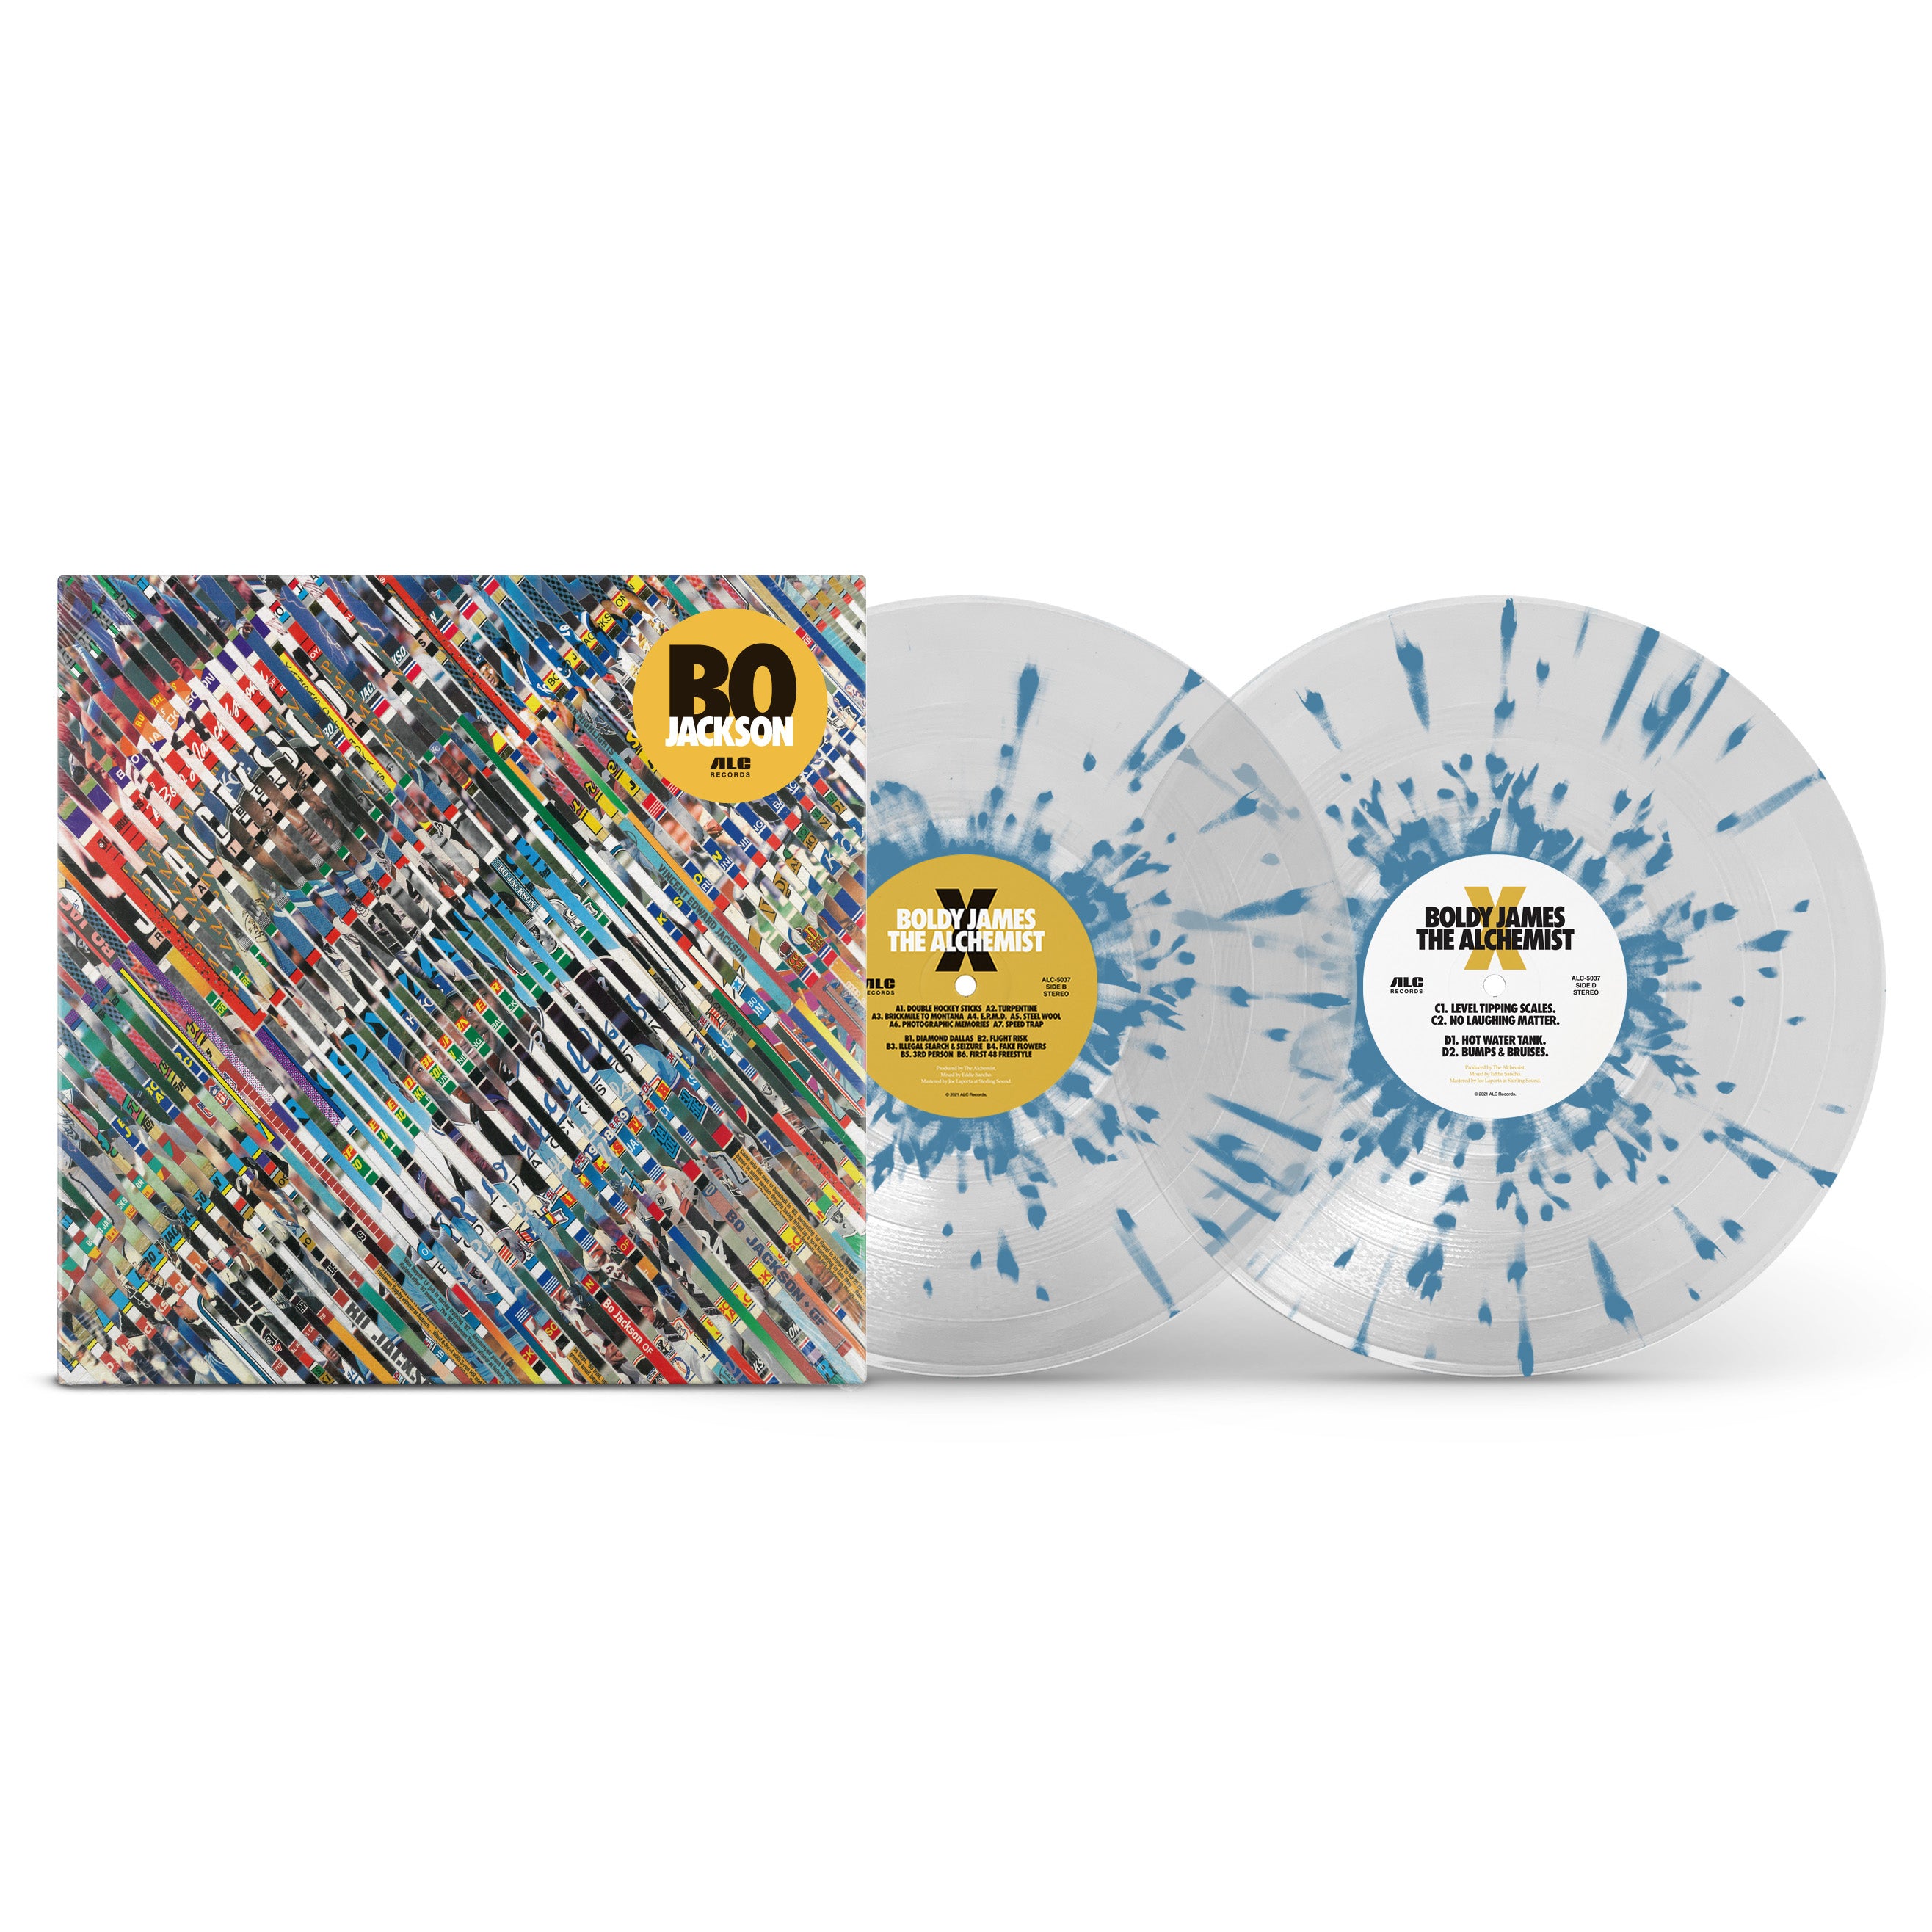 Bo Jackson: Expanded Edition (Splatter Vinyl 2xLP + Signed Insert)